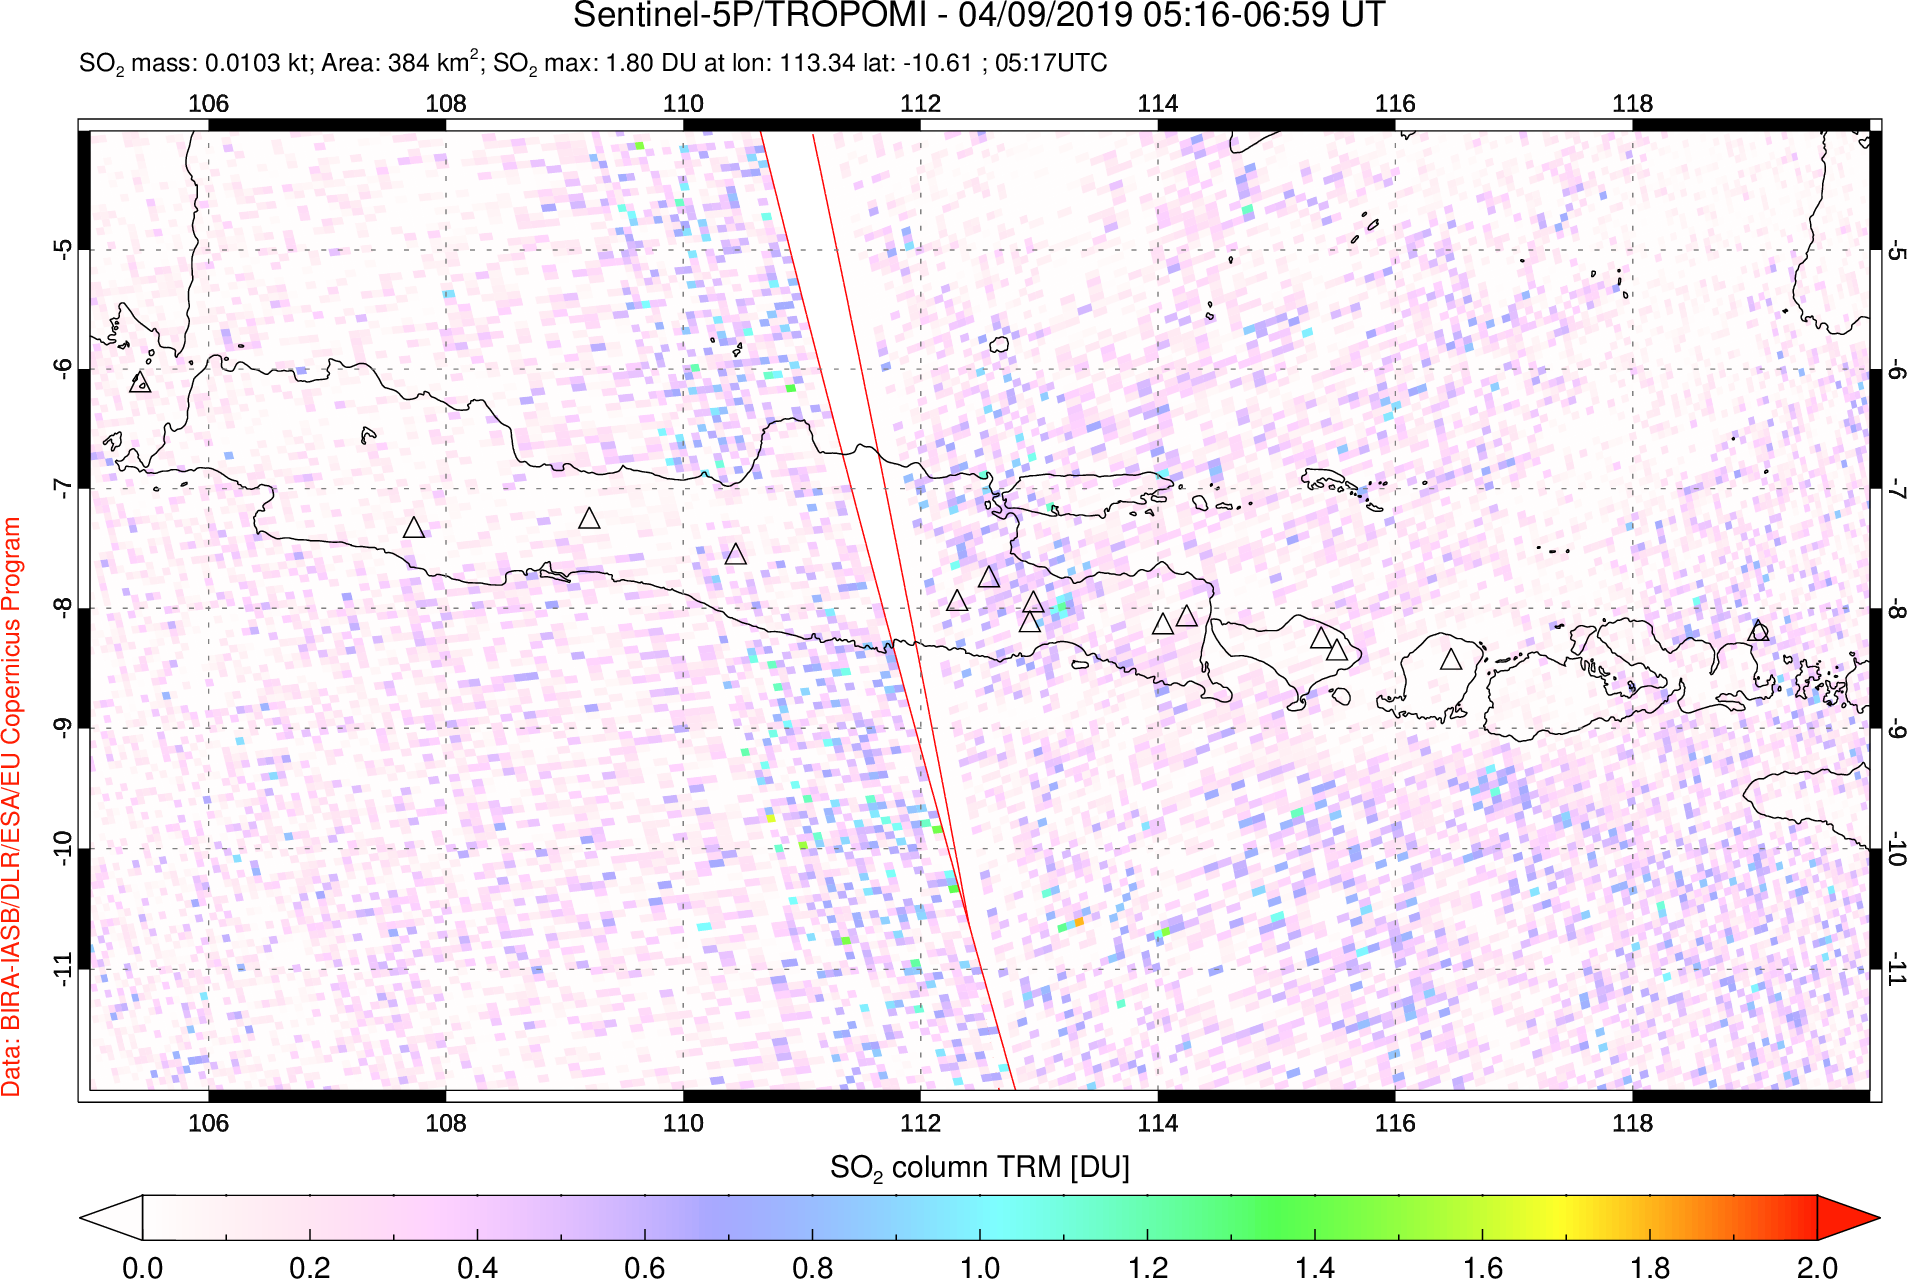 A sulfur dioxide image over Java, Indonesia on Apr 09, 2019.